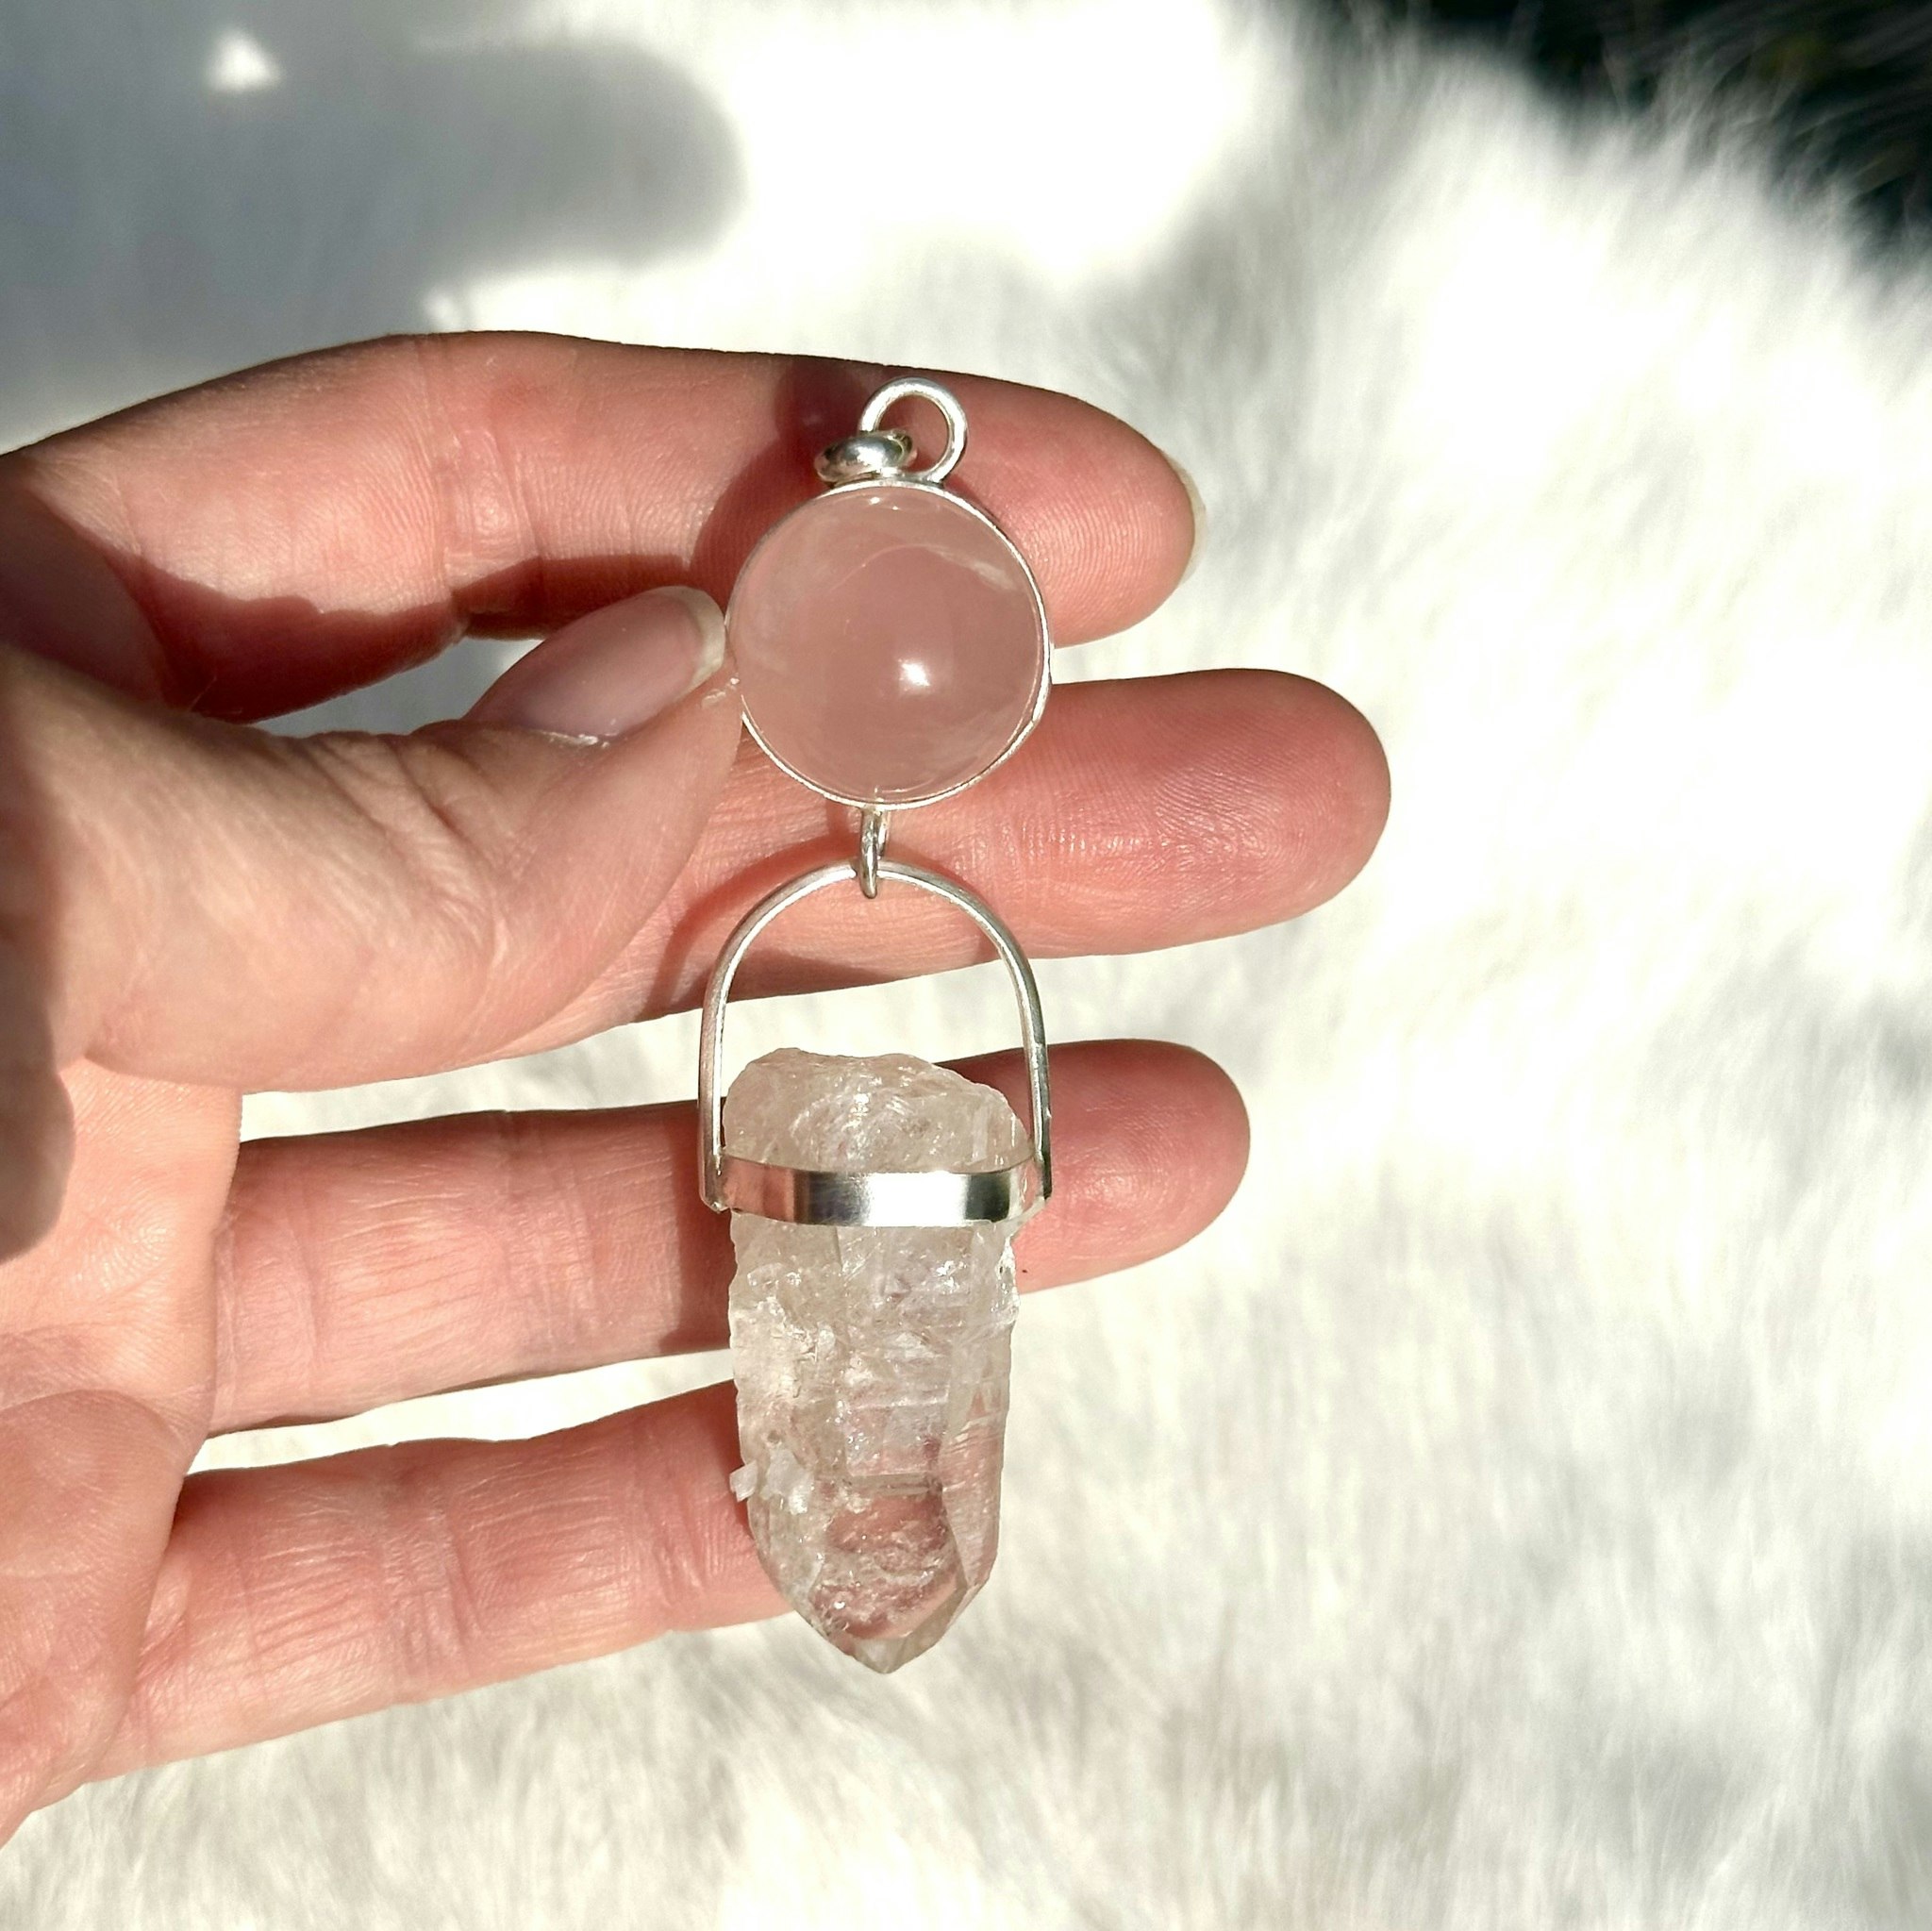 Star Rose Quartz with amazing quartz crystal from Sweden